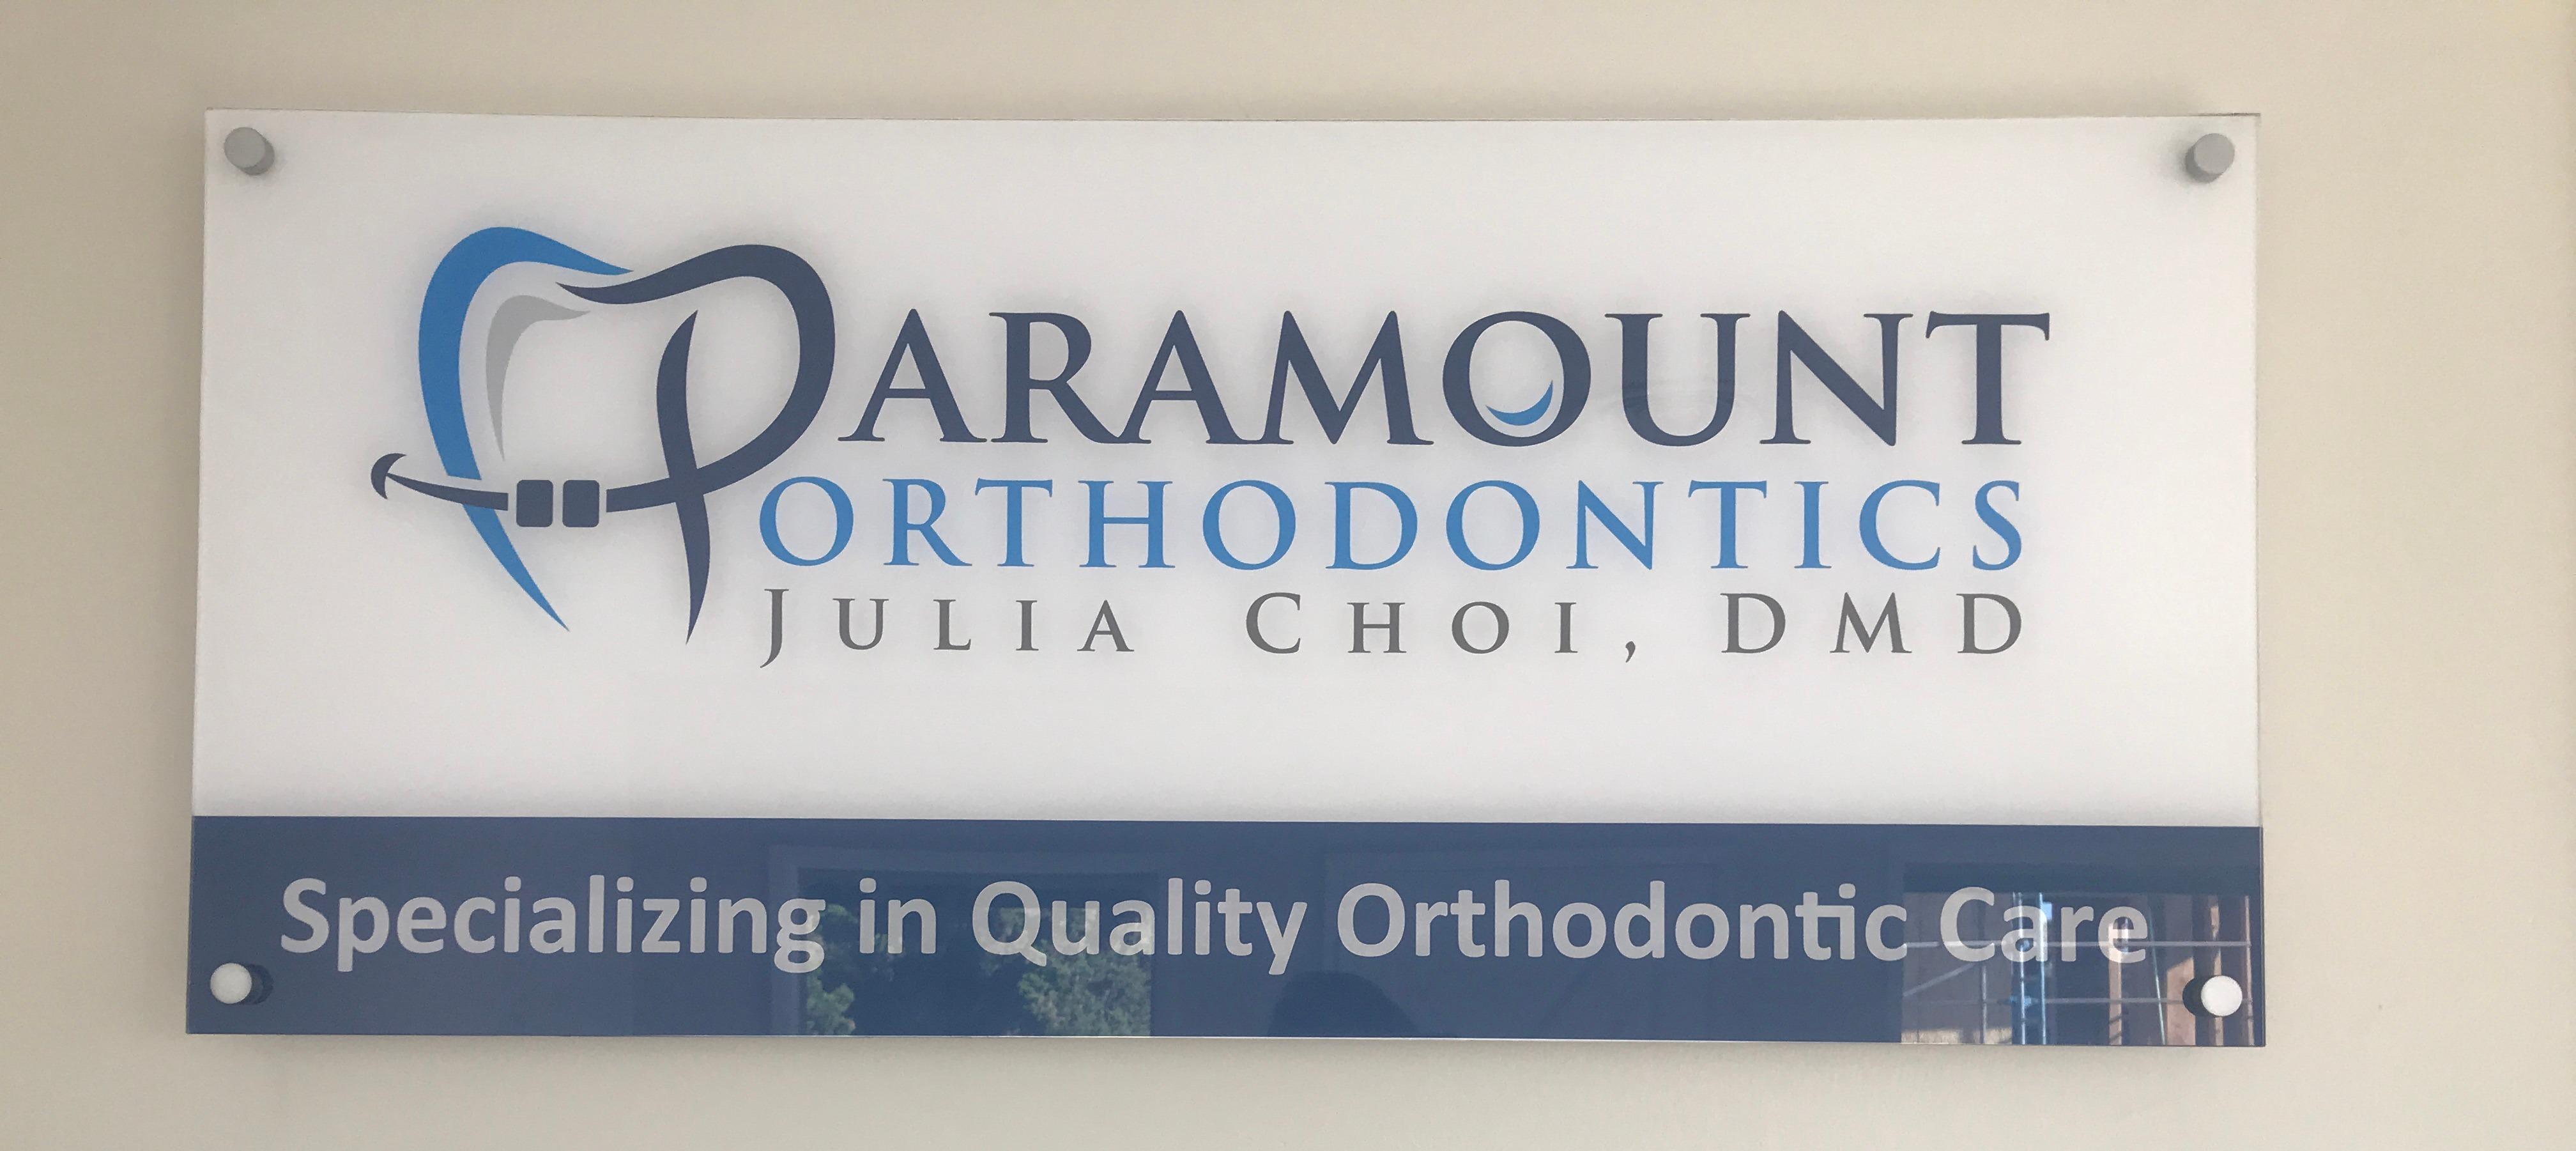 Paramount Orthodontics - Julia Choi DMD & Derek Wong DDS Photo